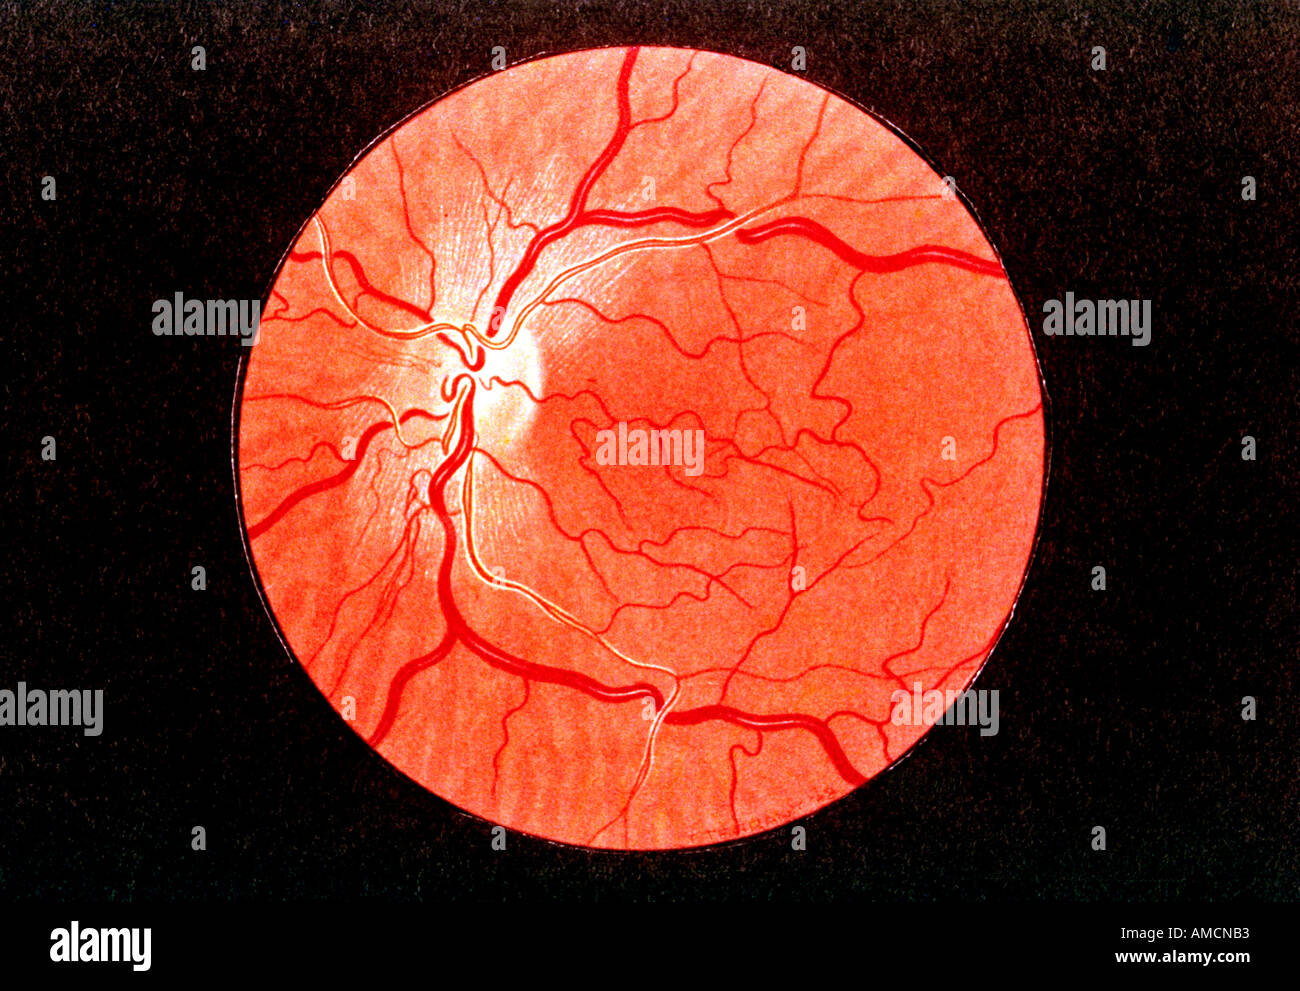 Diagram - arteriovenous nipping Stock Photo